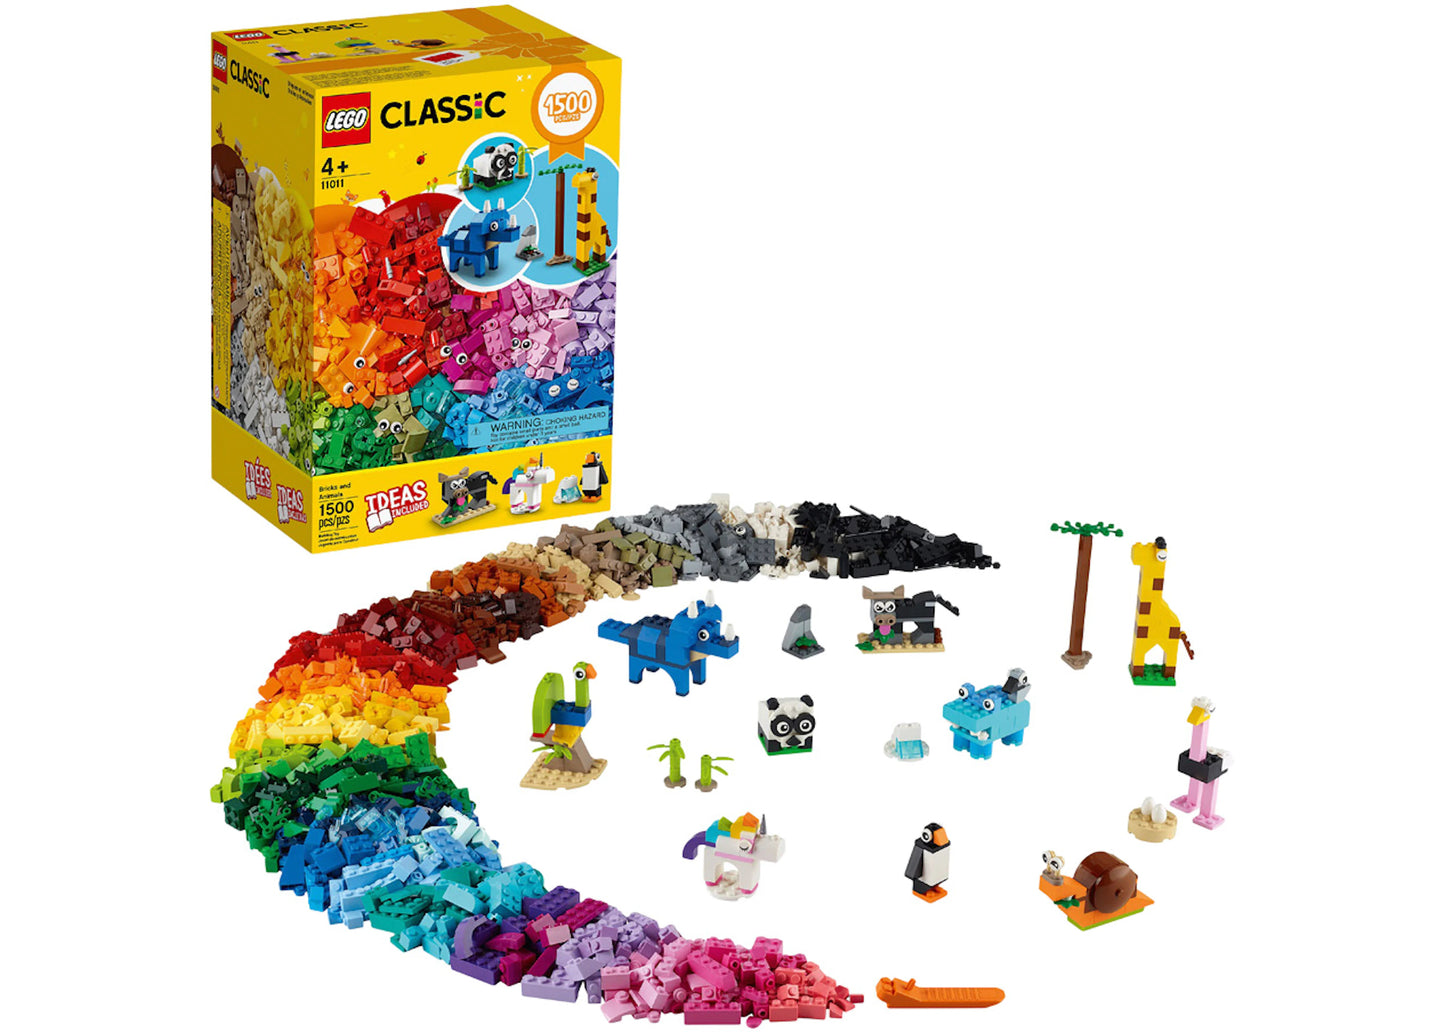 【LEGO】EDUCATION CLASSIC (11011)